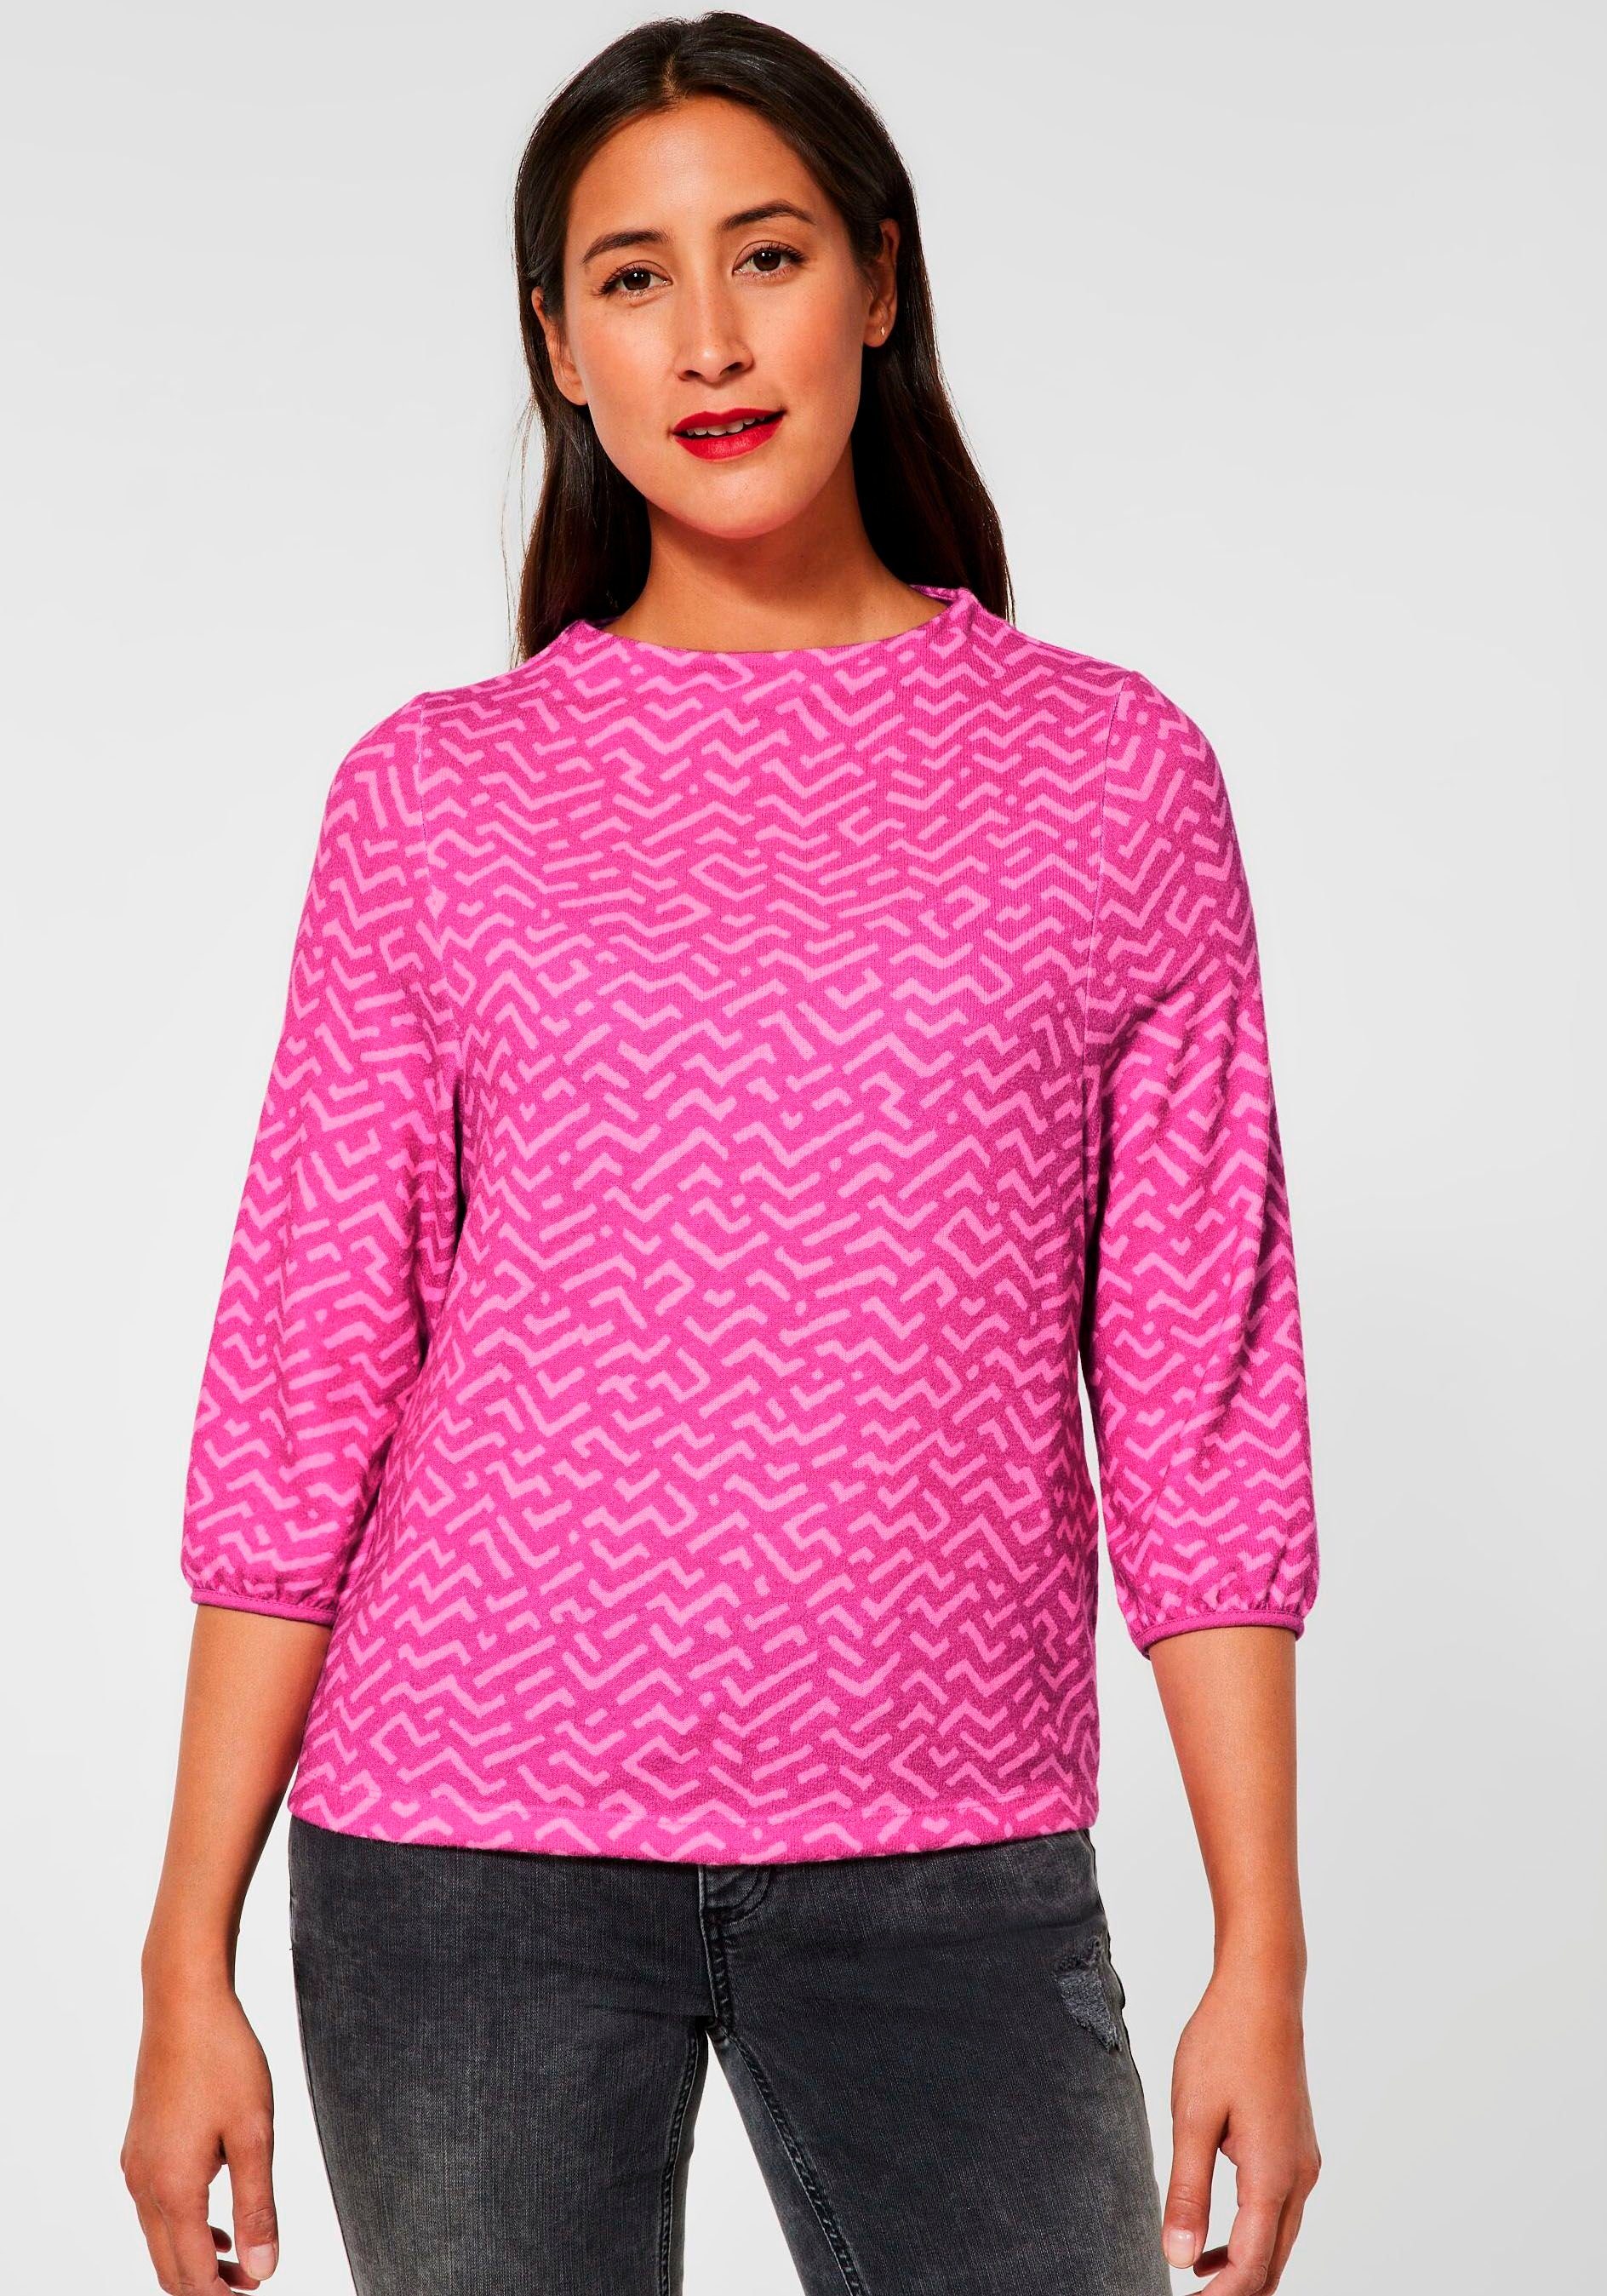 STREET lavish Print-Shirt pink ONE mit Zick-Zack-Muster